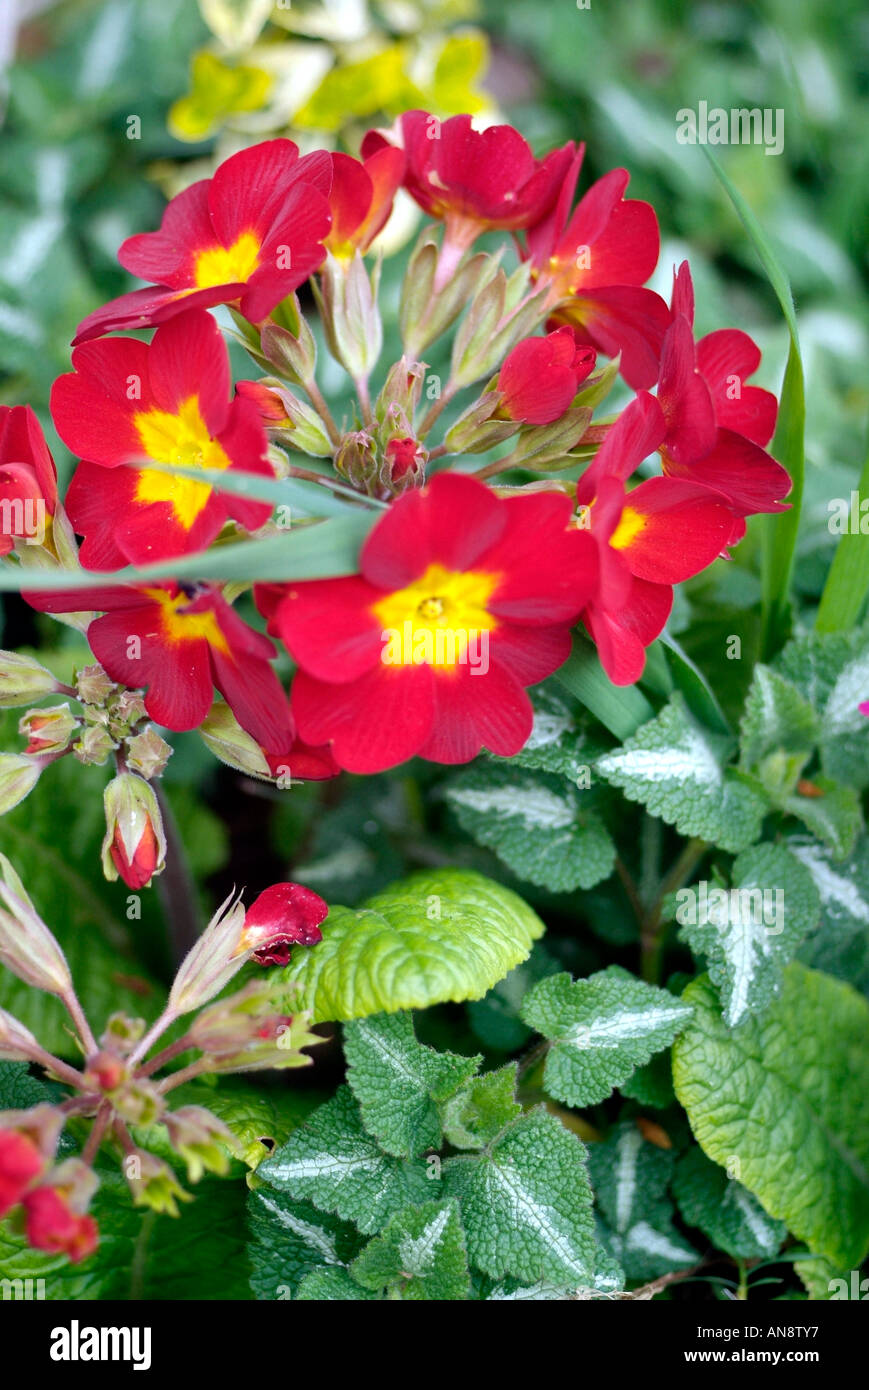 Portrait-Format Bild mit roten Blüten Stockfoto